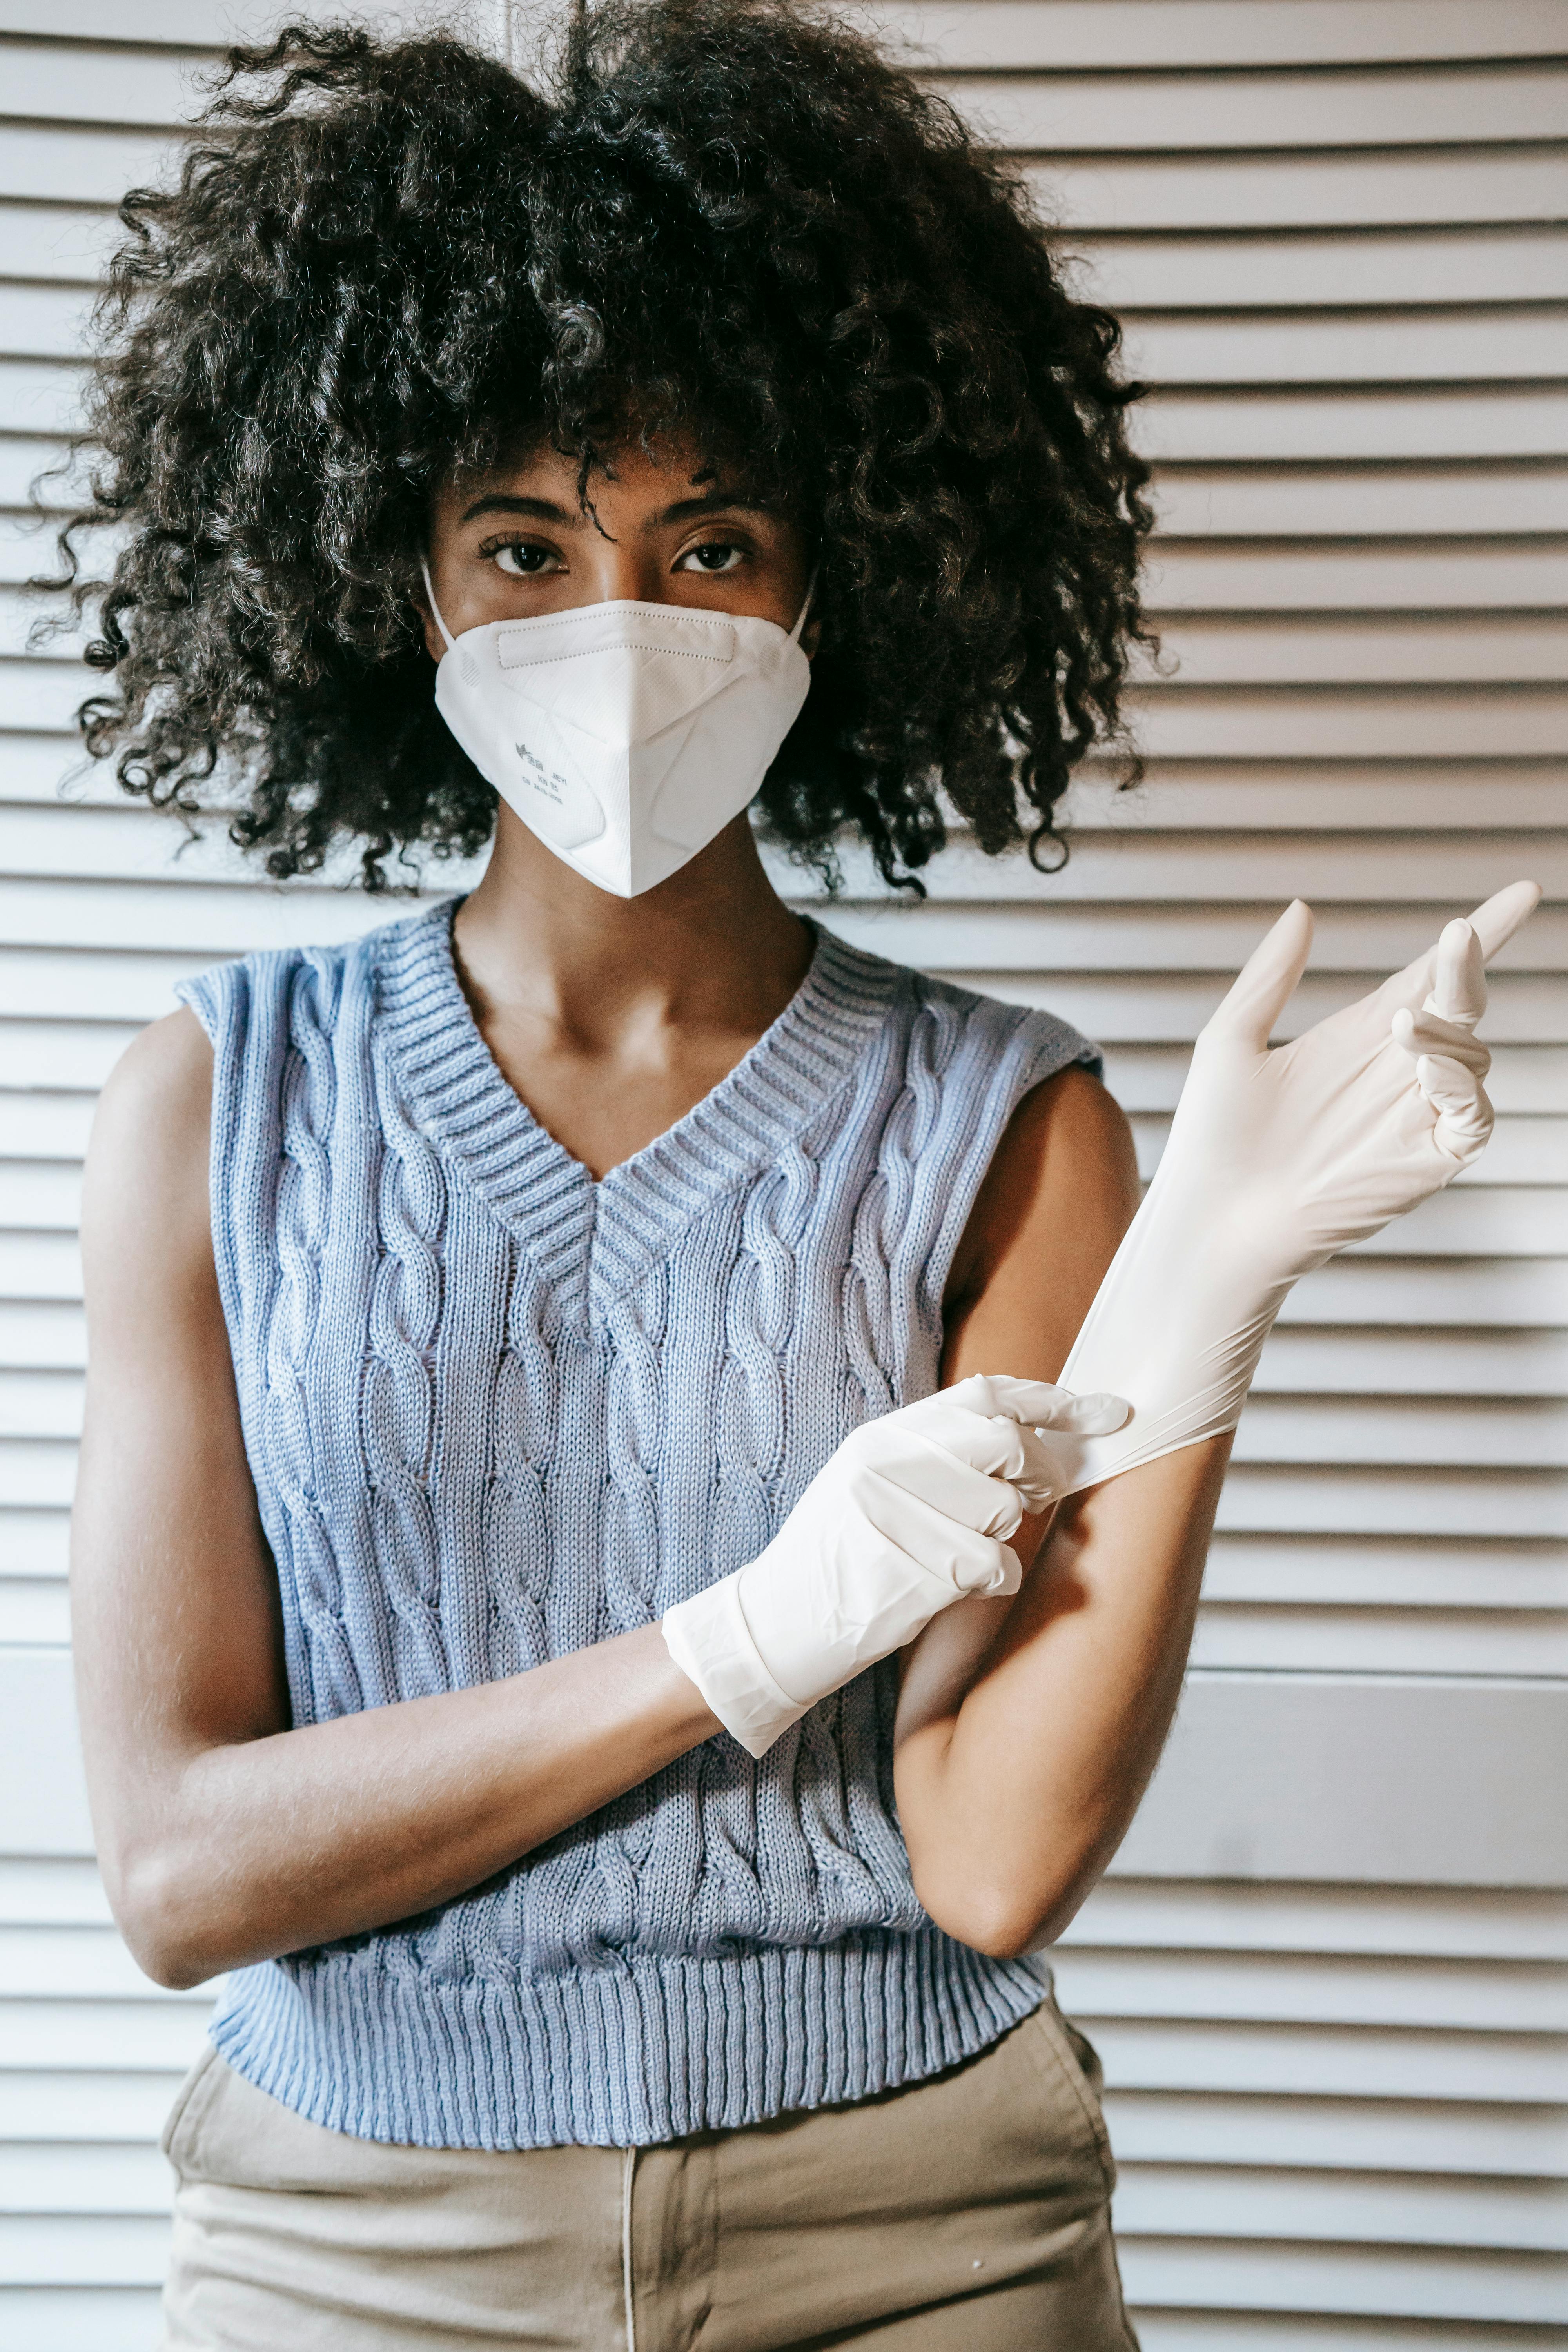 ethnic woman putting on gloves during coronavirus pandemic